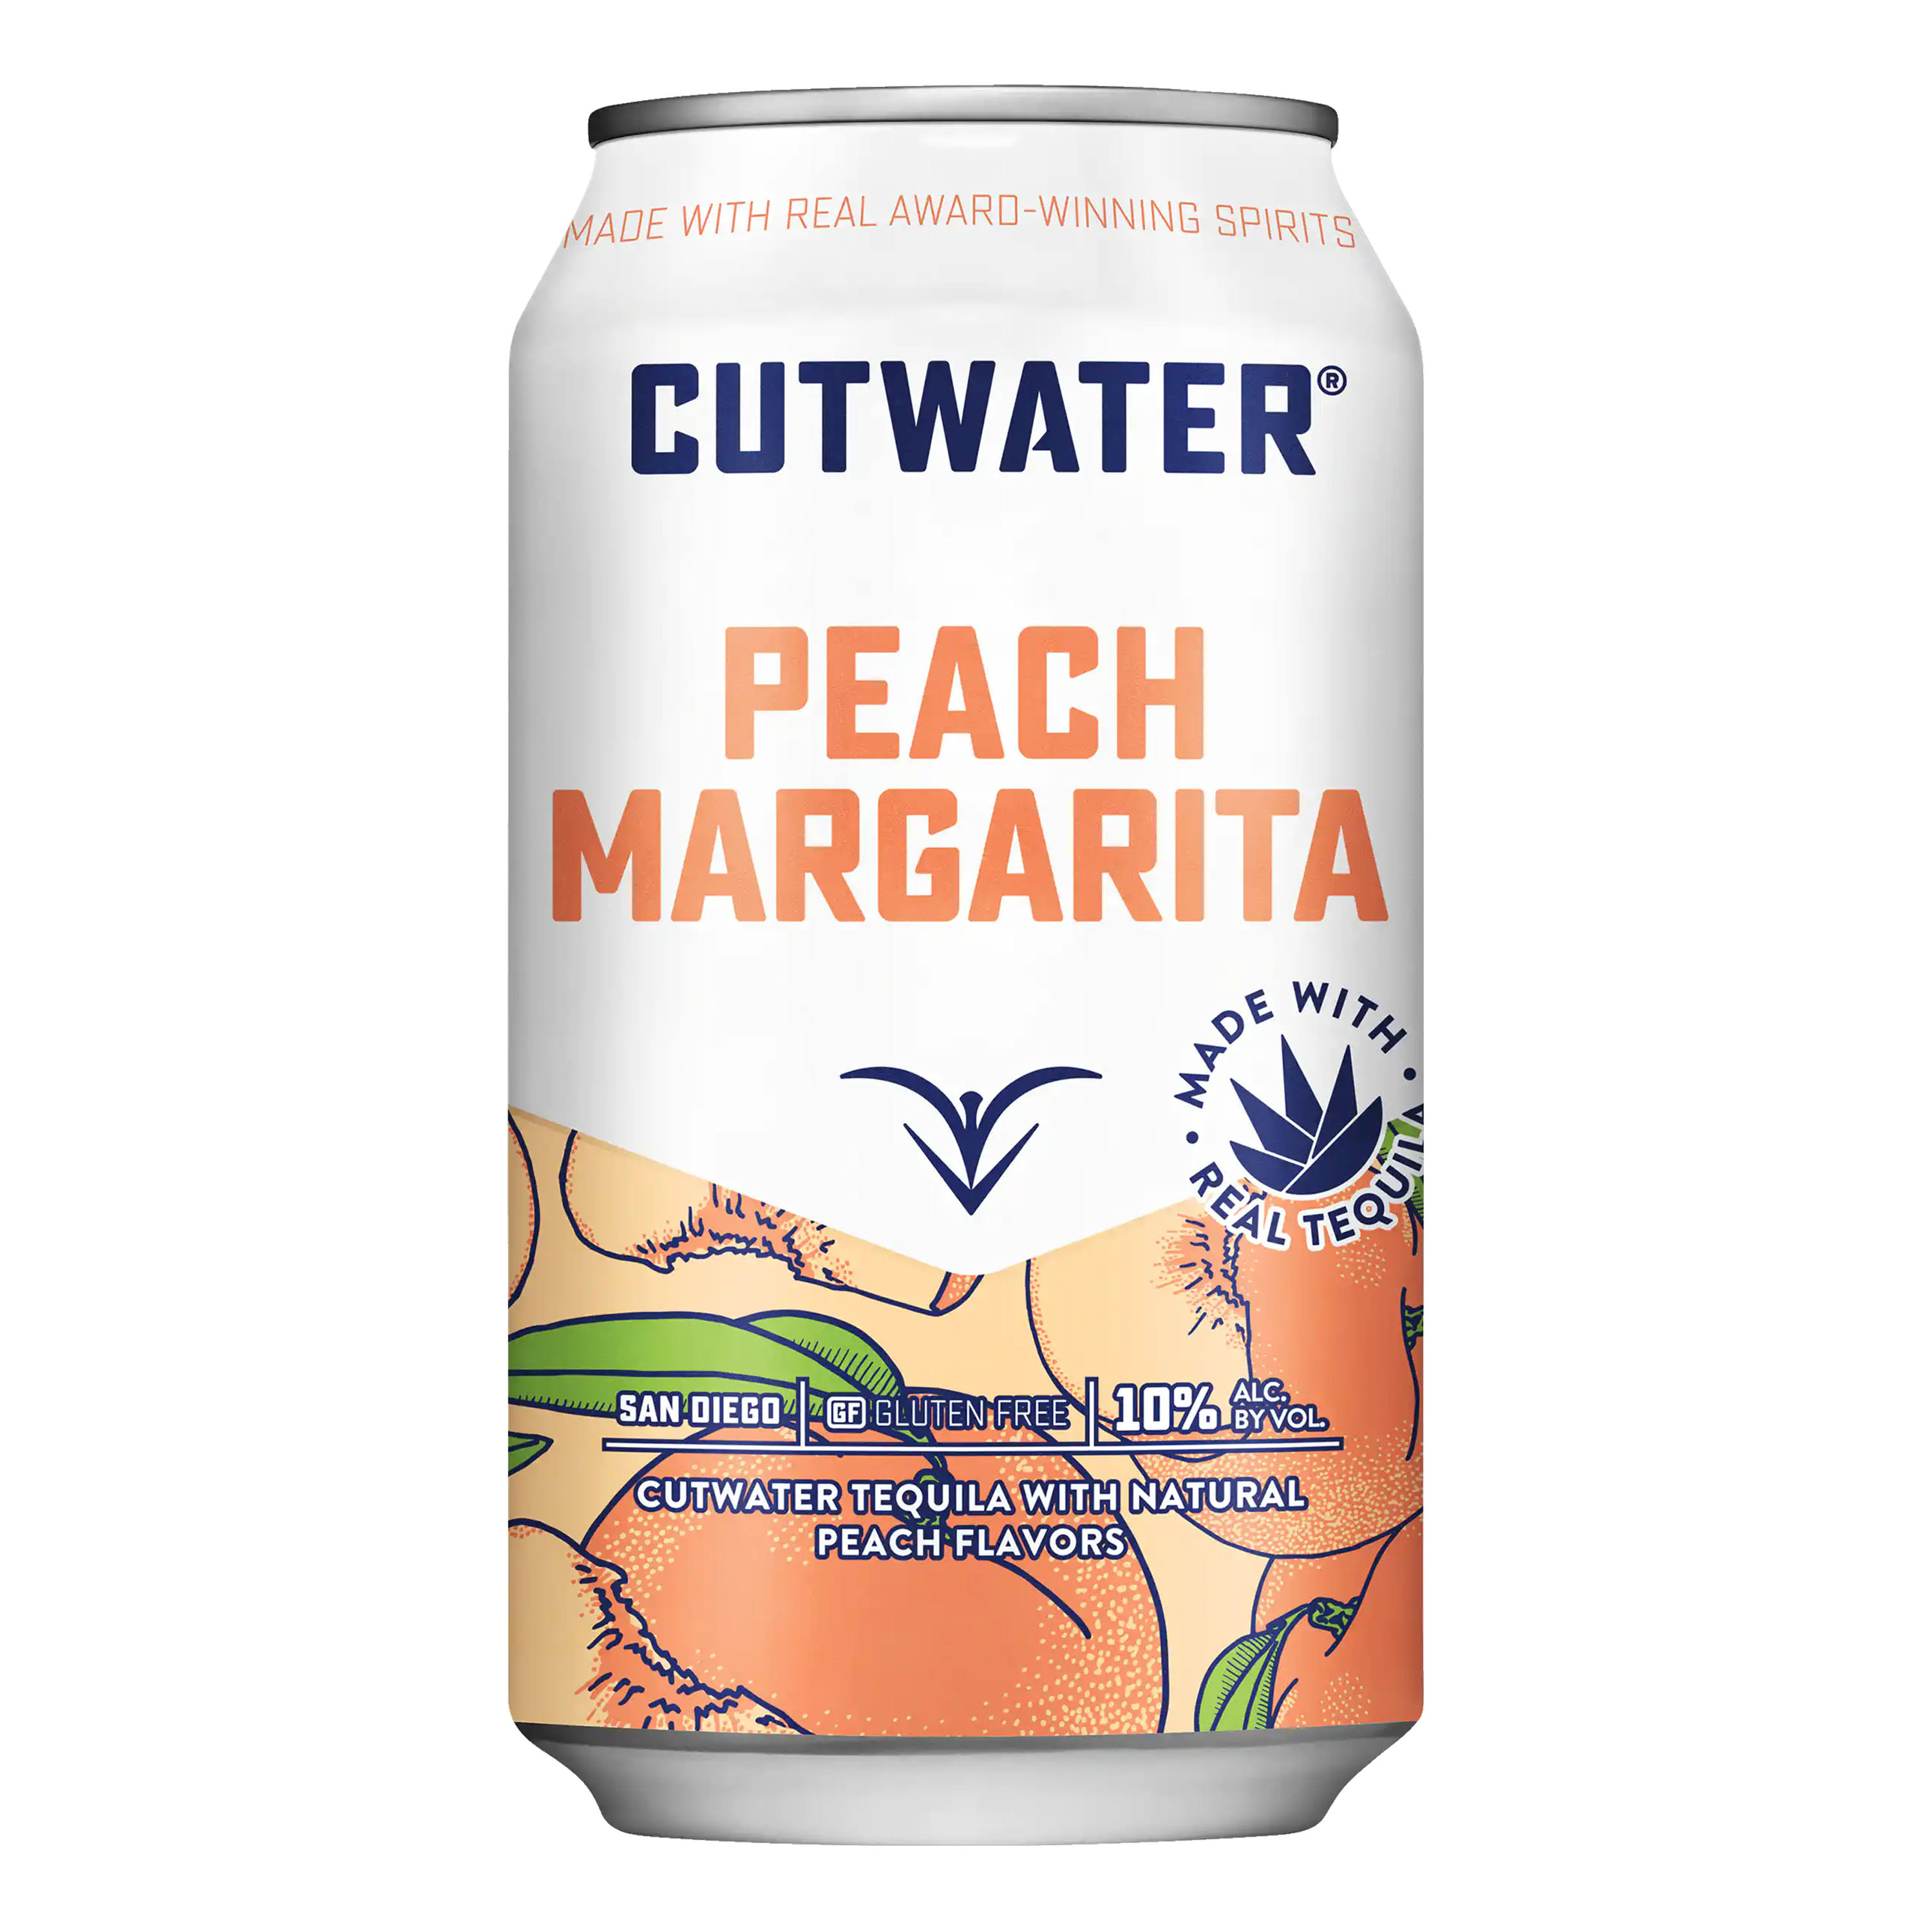 Cutwater Peach Margarita